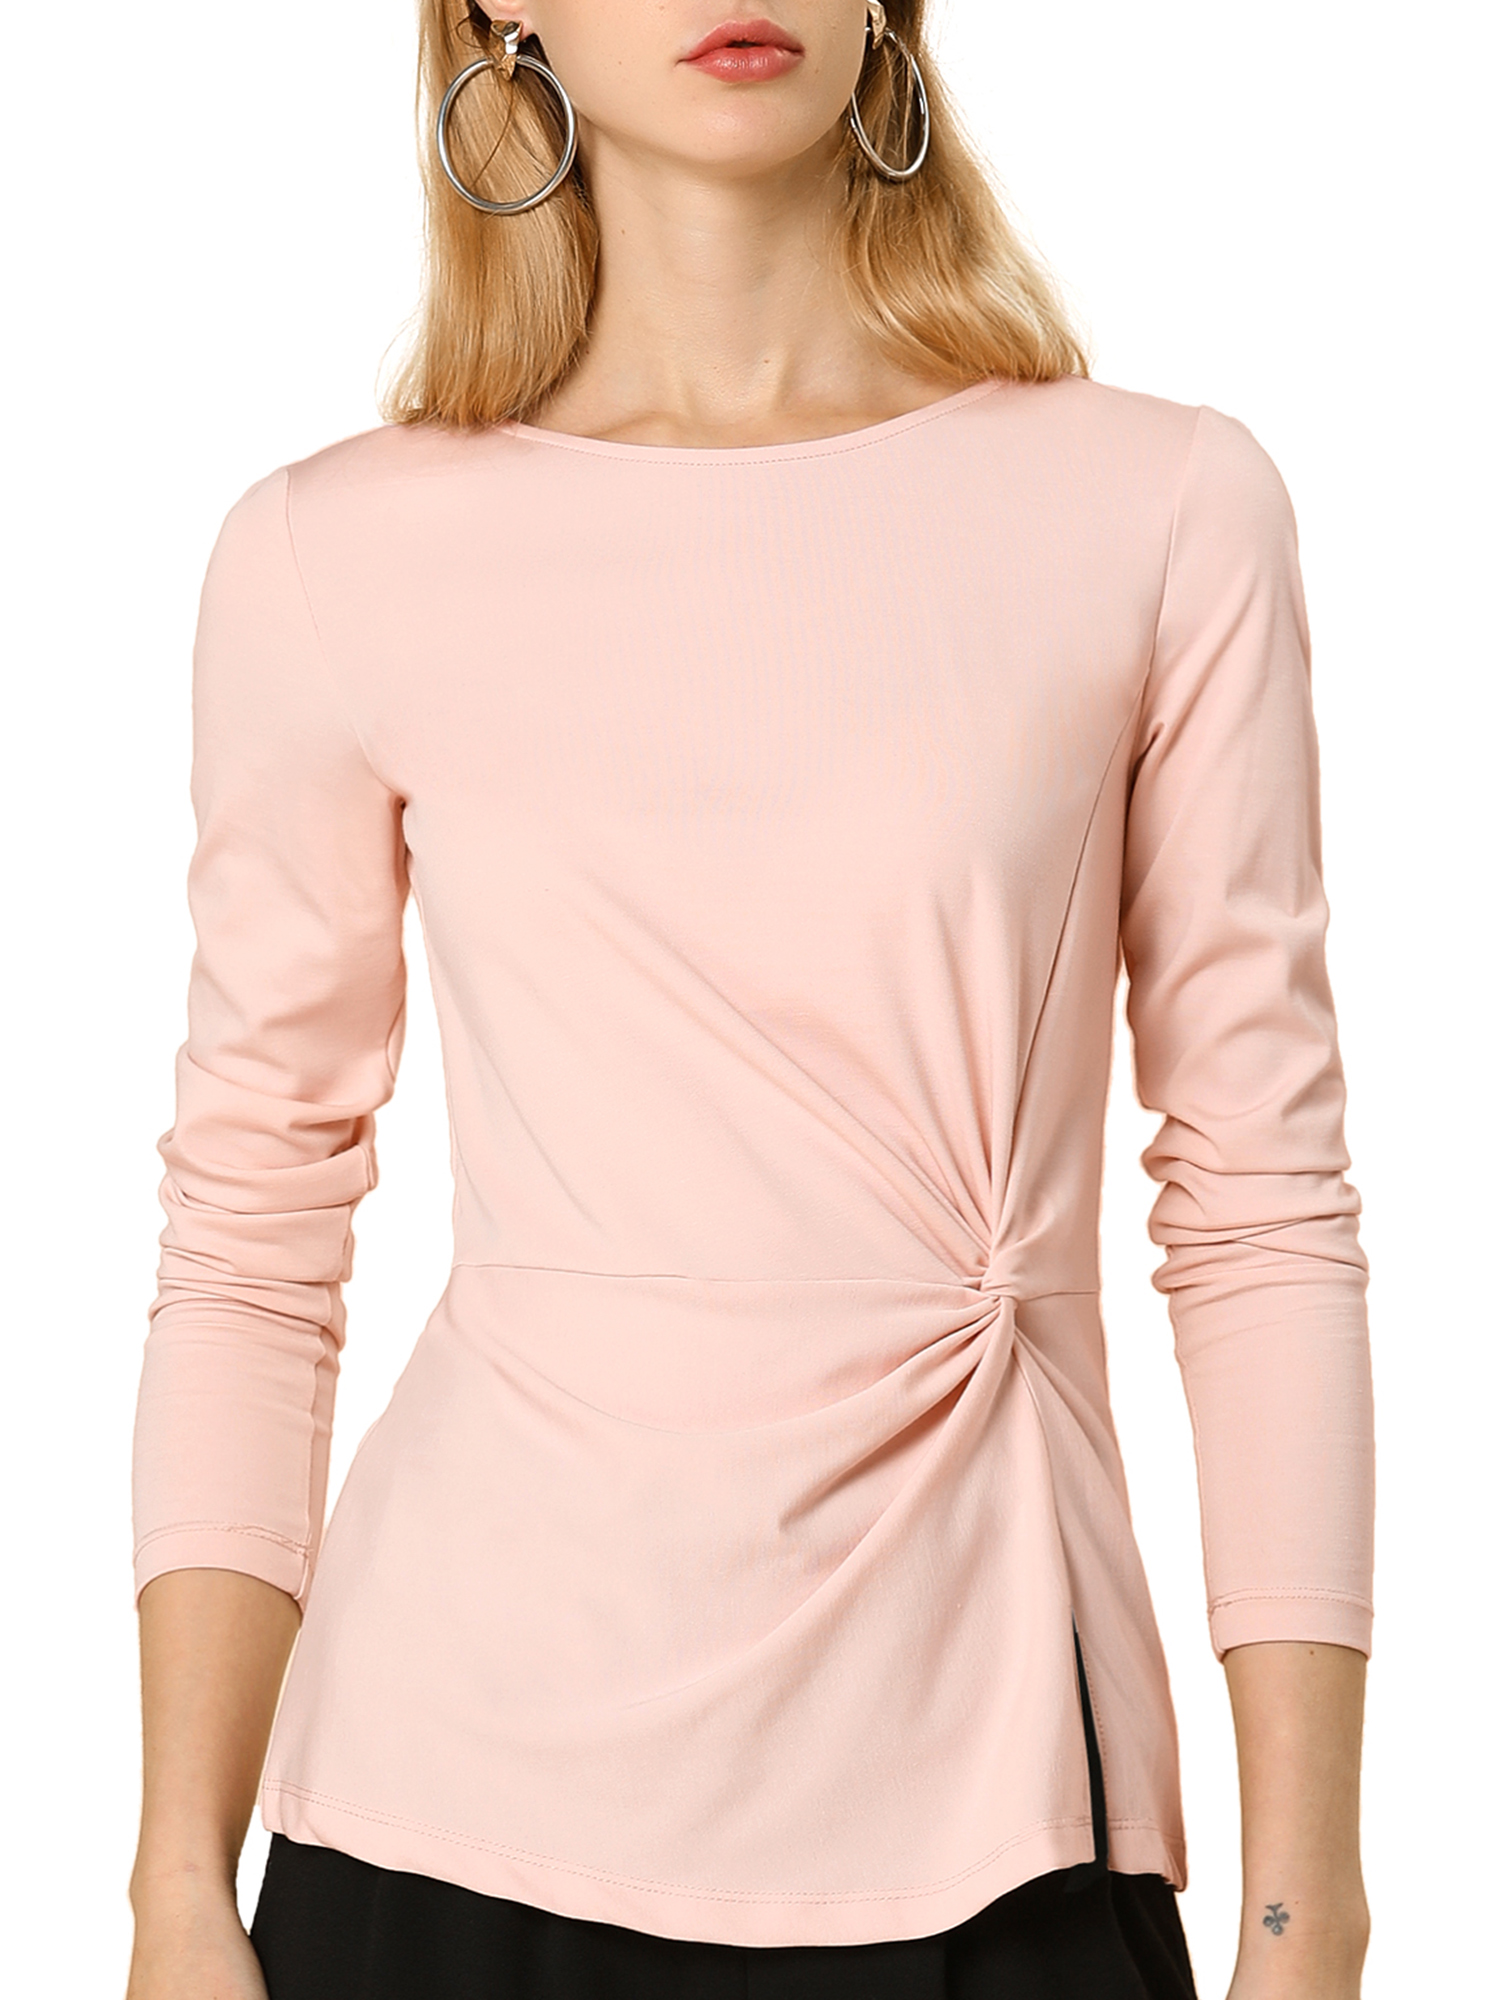 MODA NOVA Junior's Round Neck Tops Long Sleeve Blouse Shirt Pink M - image 1 of 6